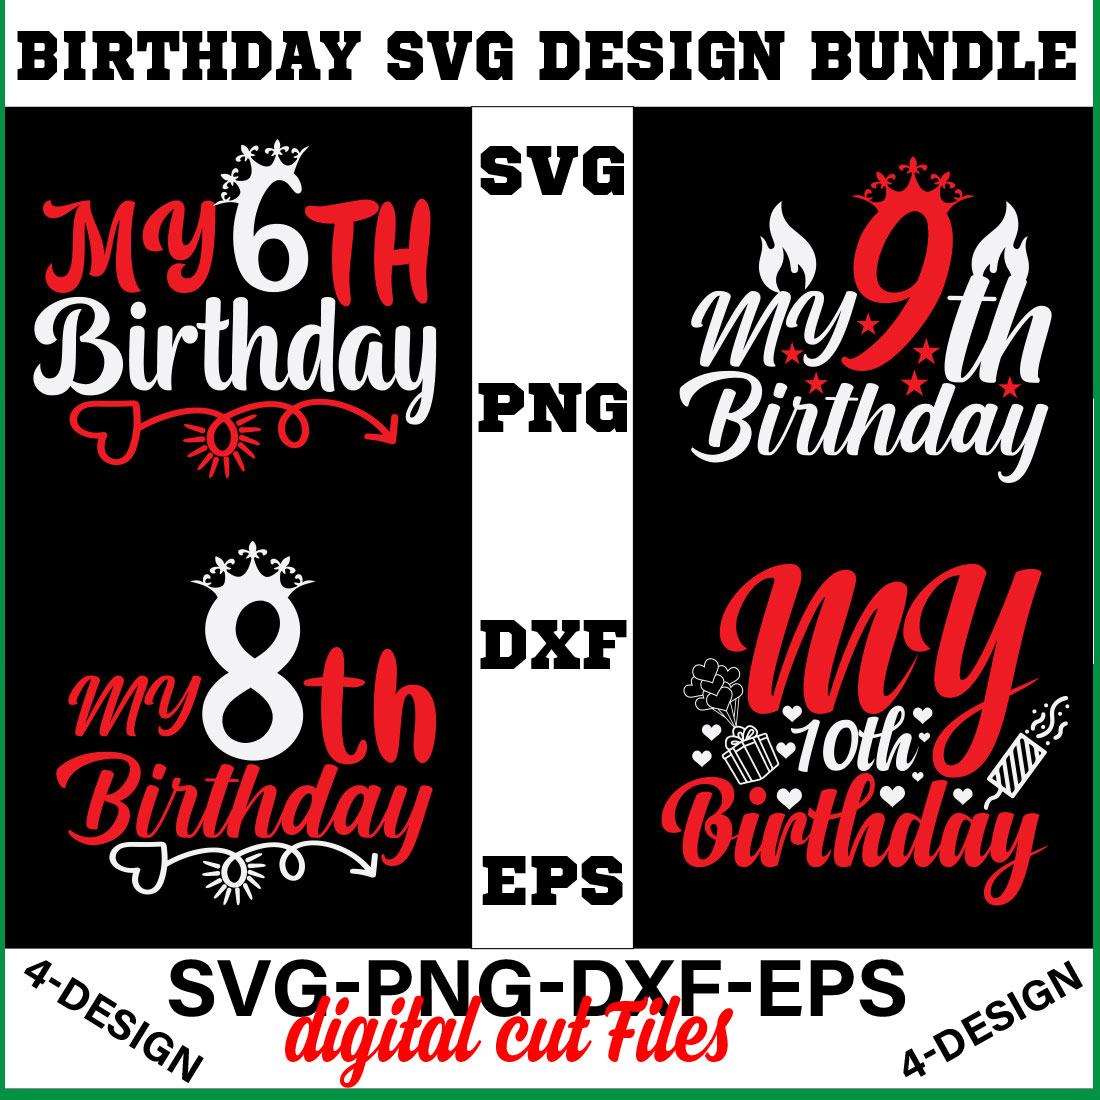 birthday svg design bundle Happy birthday svg bundle hand lettered birthday svg birthday party svg Volume-26 cover image.